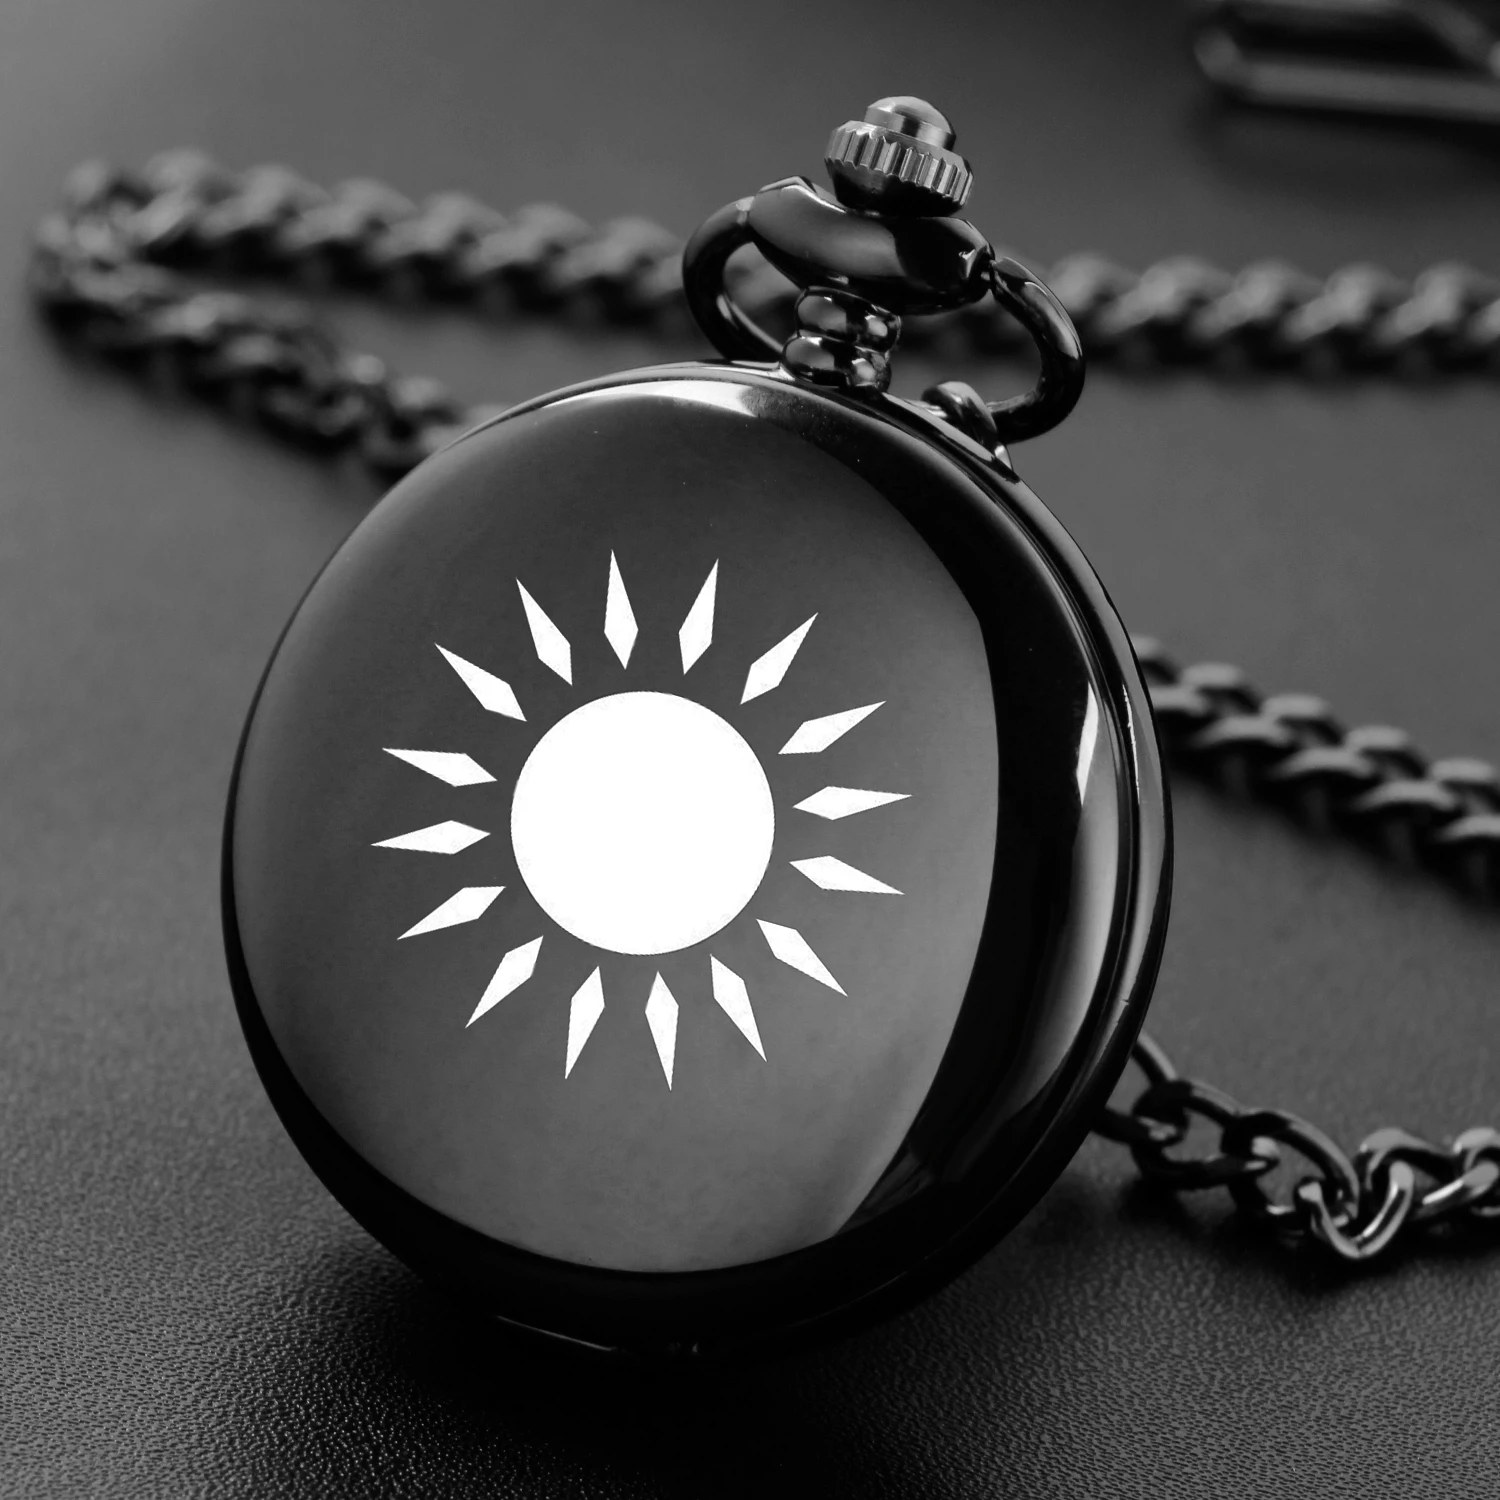 

The sun element simple design carving english alphabet face pocket watch a belt chain Black quartz watch perfect gift